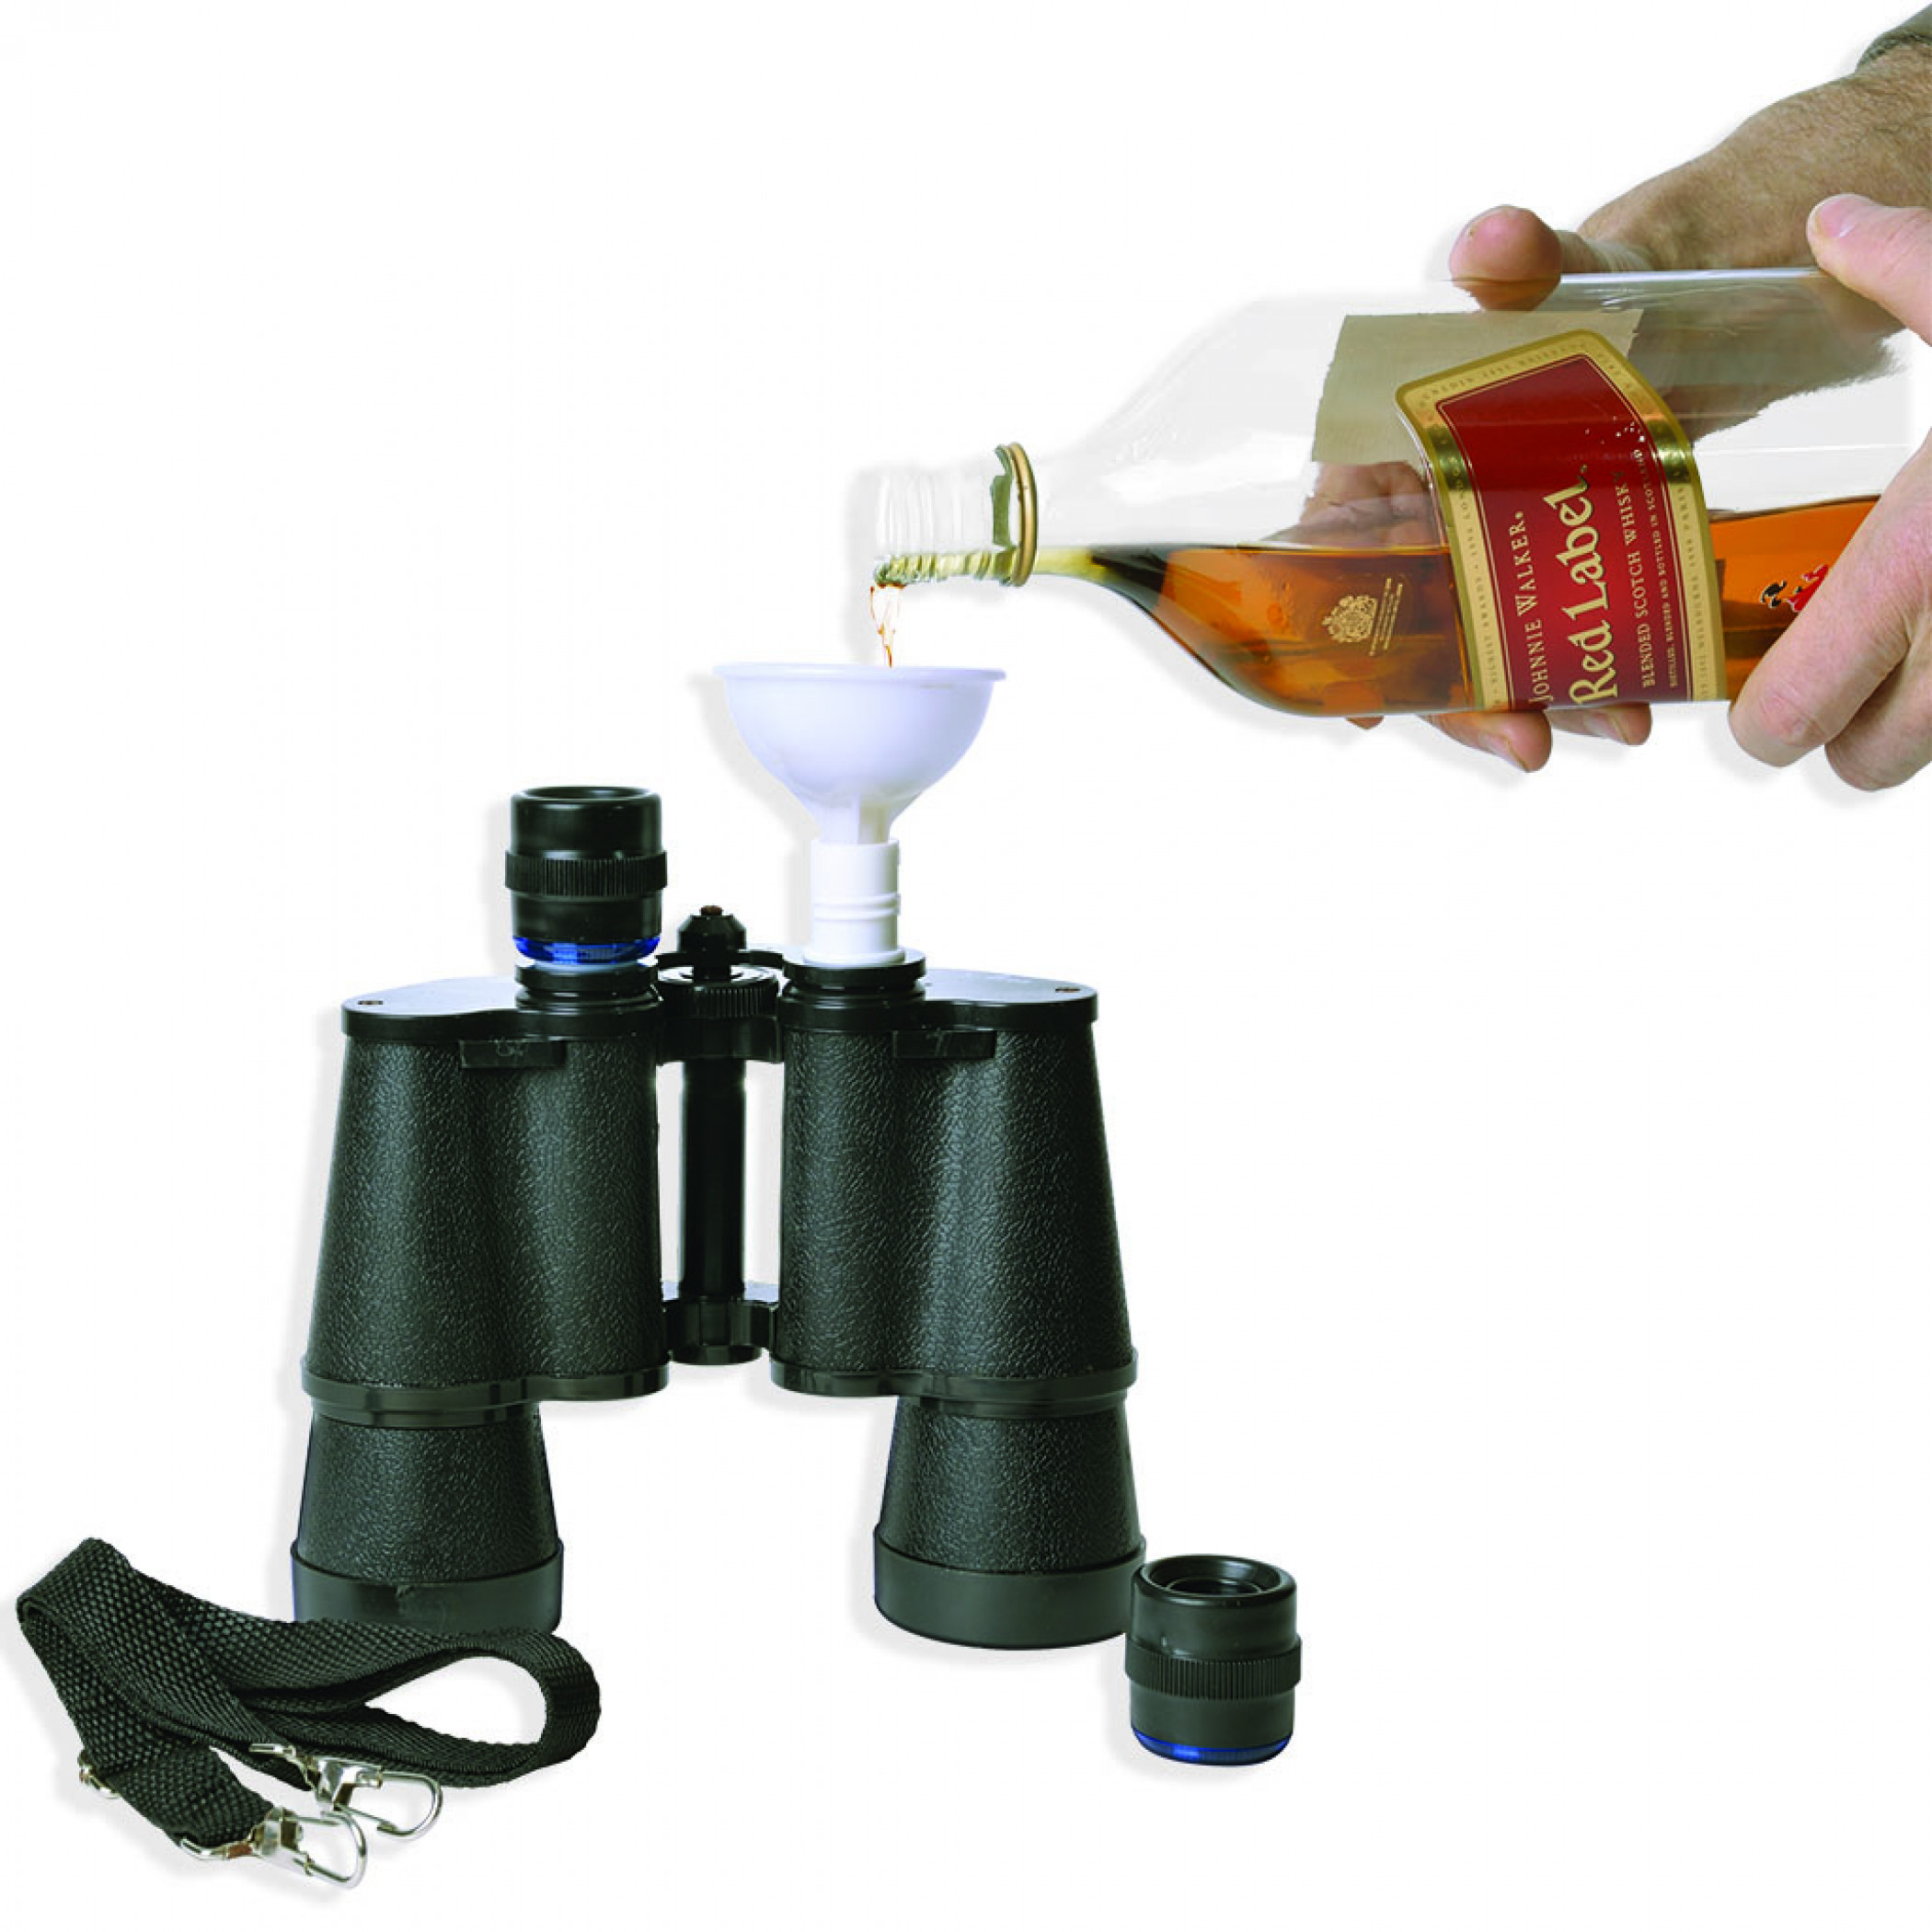 Double Barreled Binocular Flask